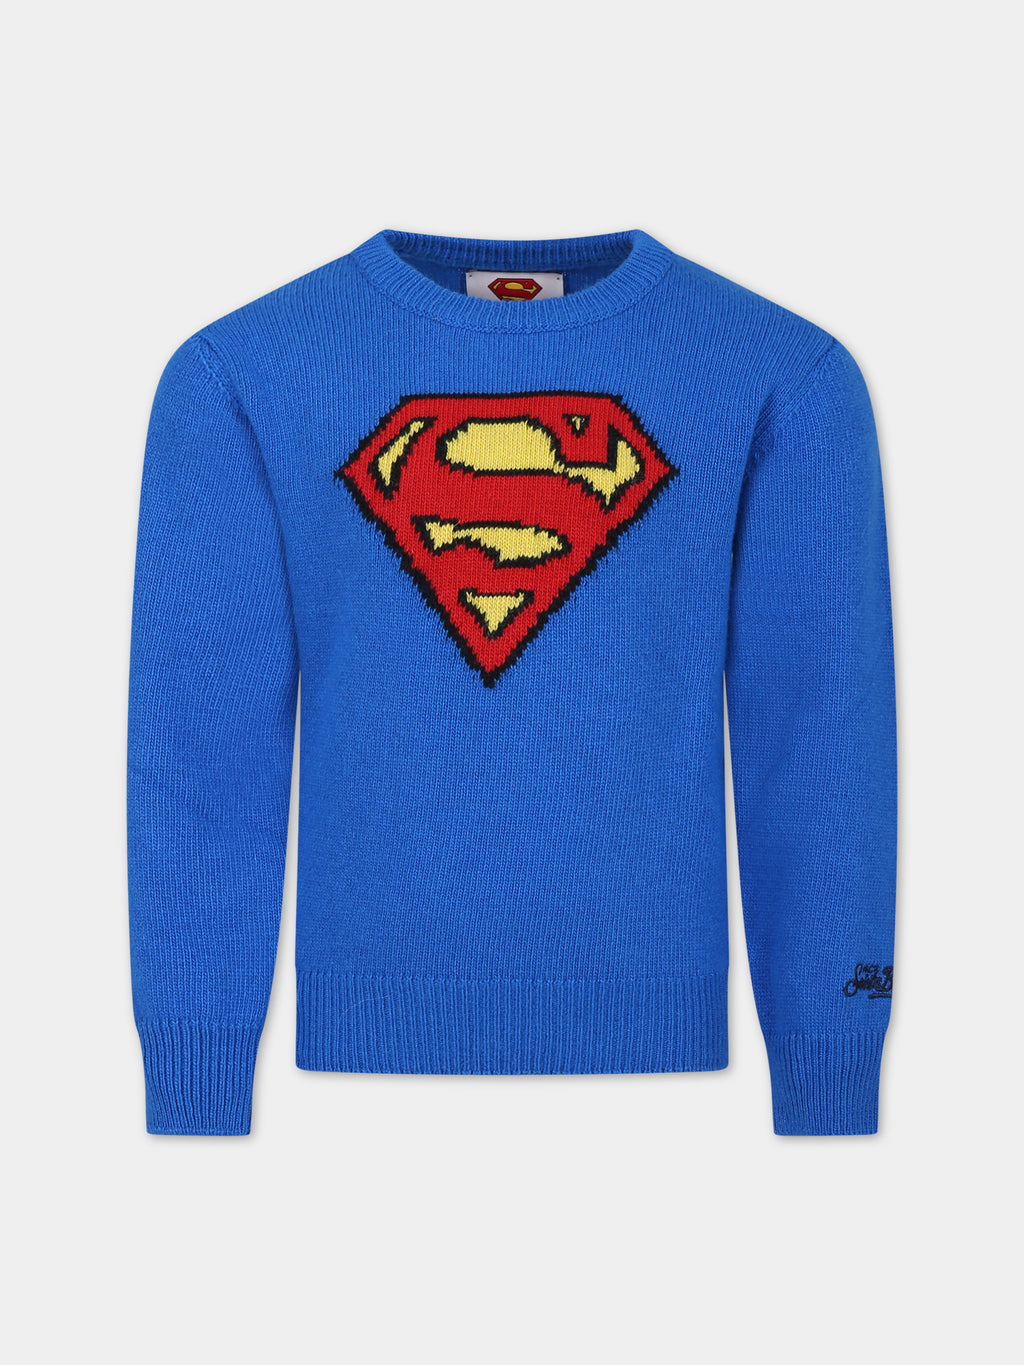 Pull bleu pour garçon avec Superman